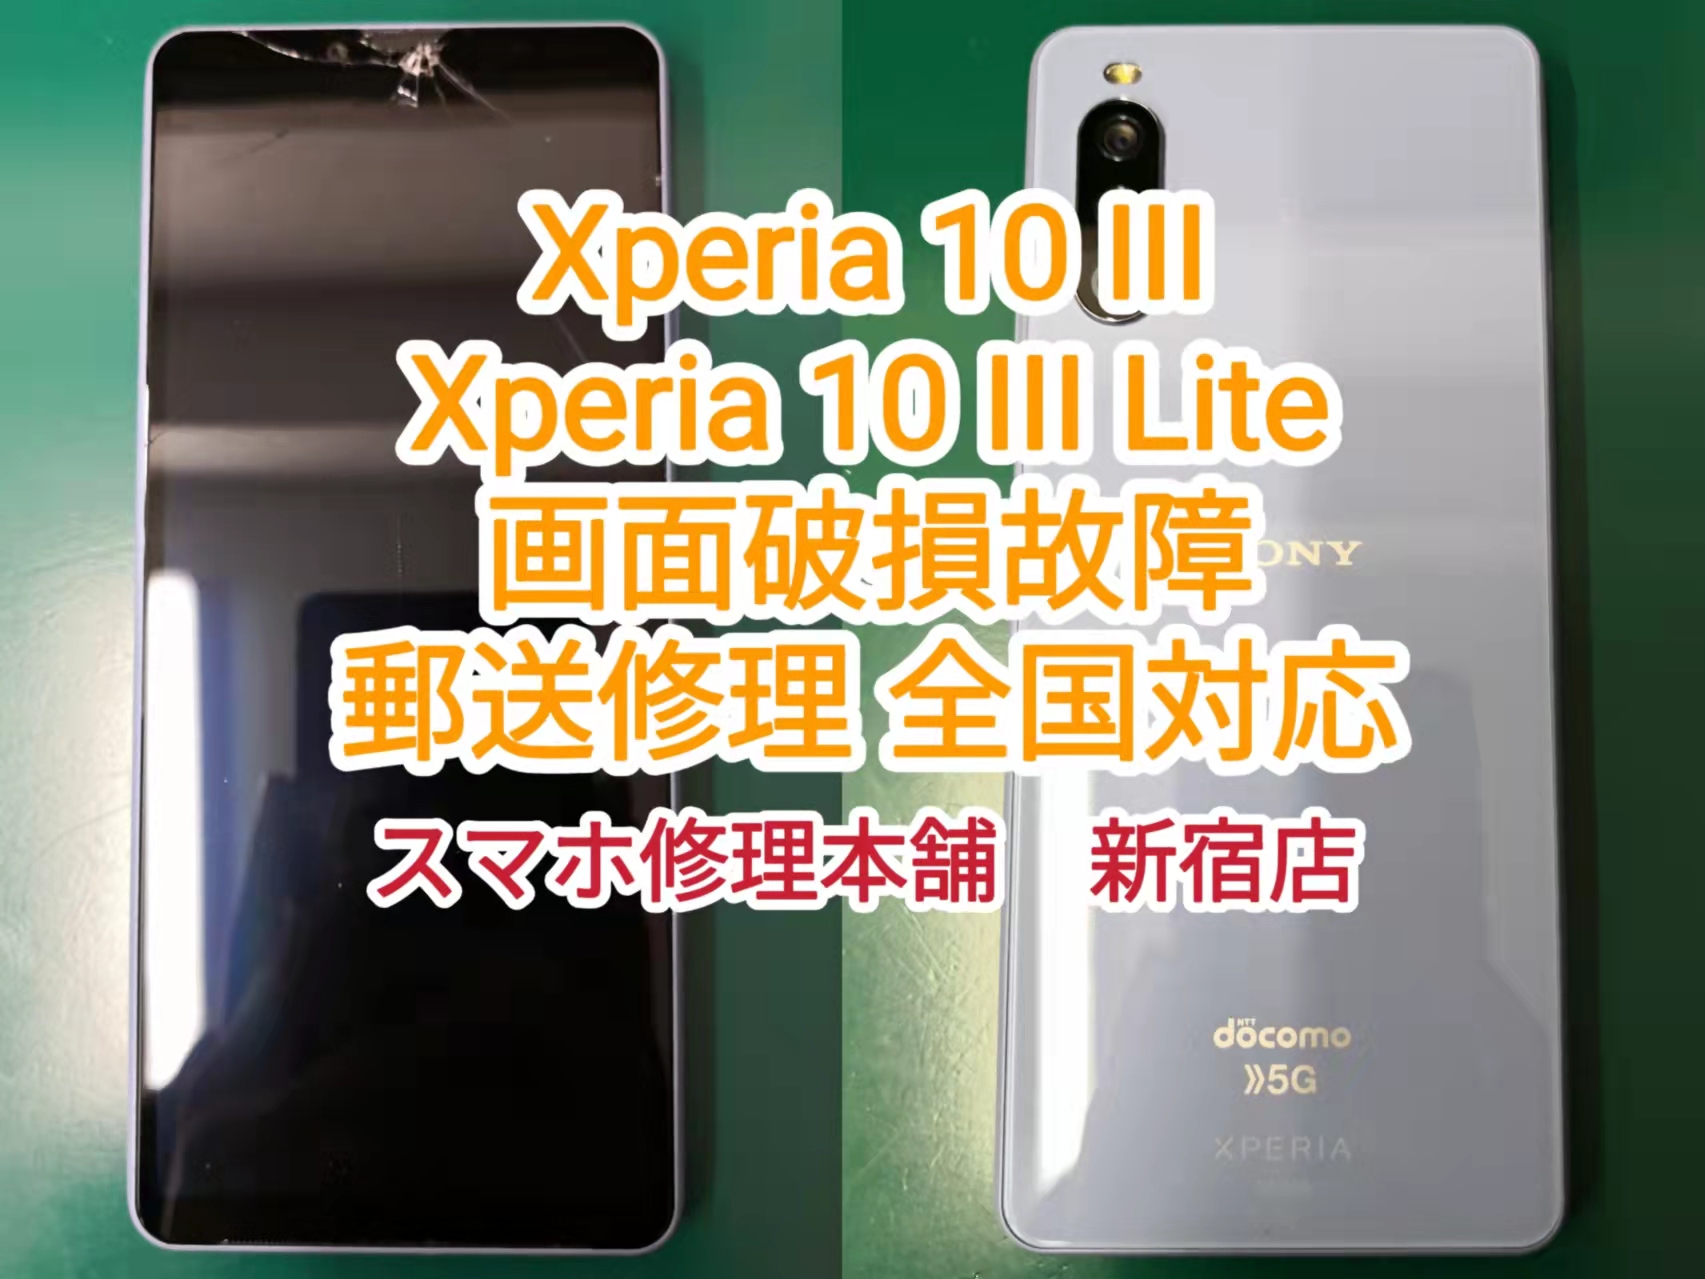 Xperia 10 III & Xperia 10 III Lite】 画面割れ 液晶破損 ひび割れ 縦